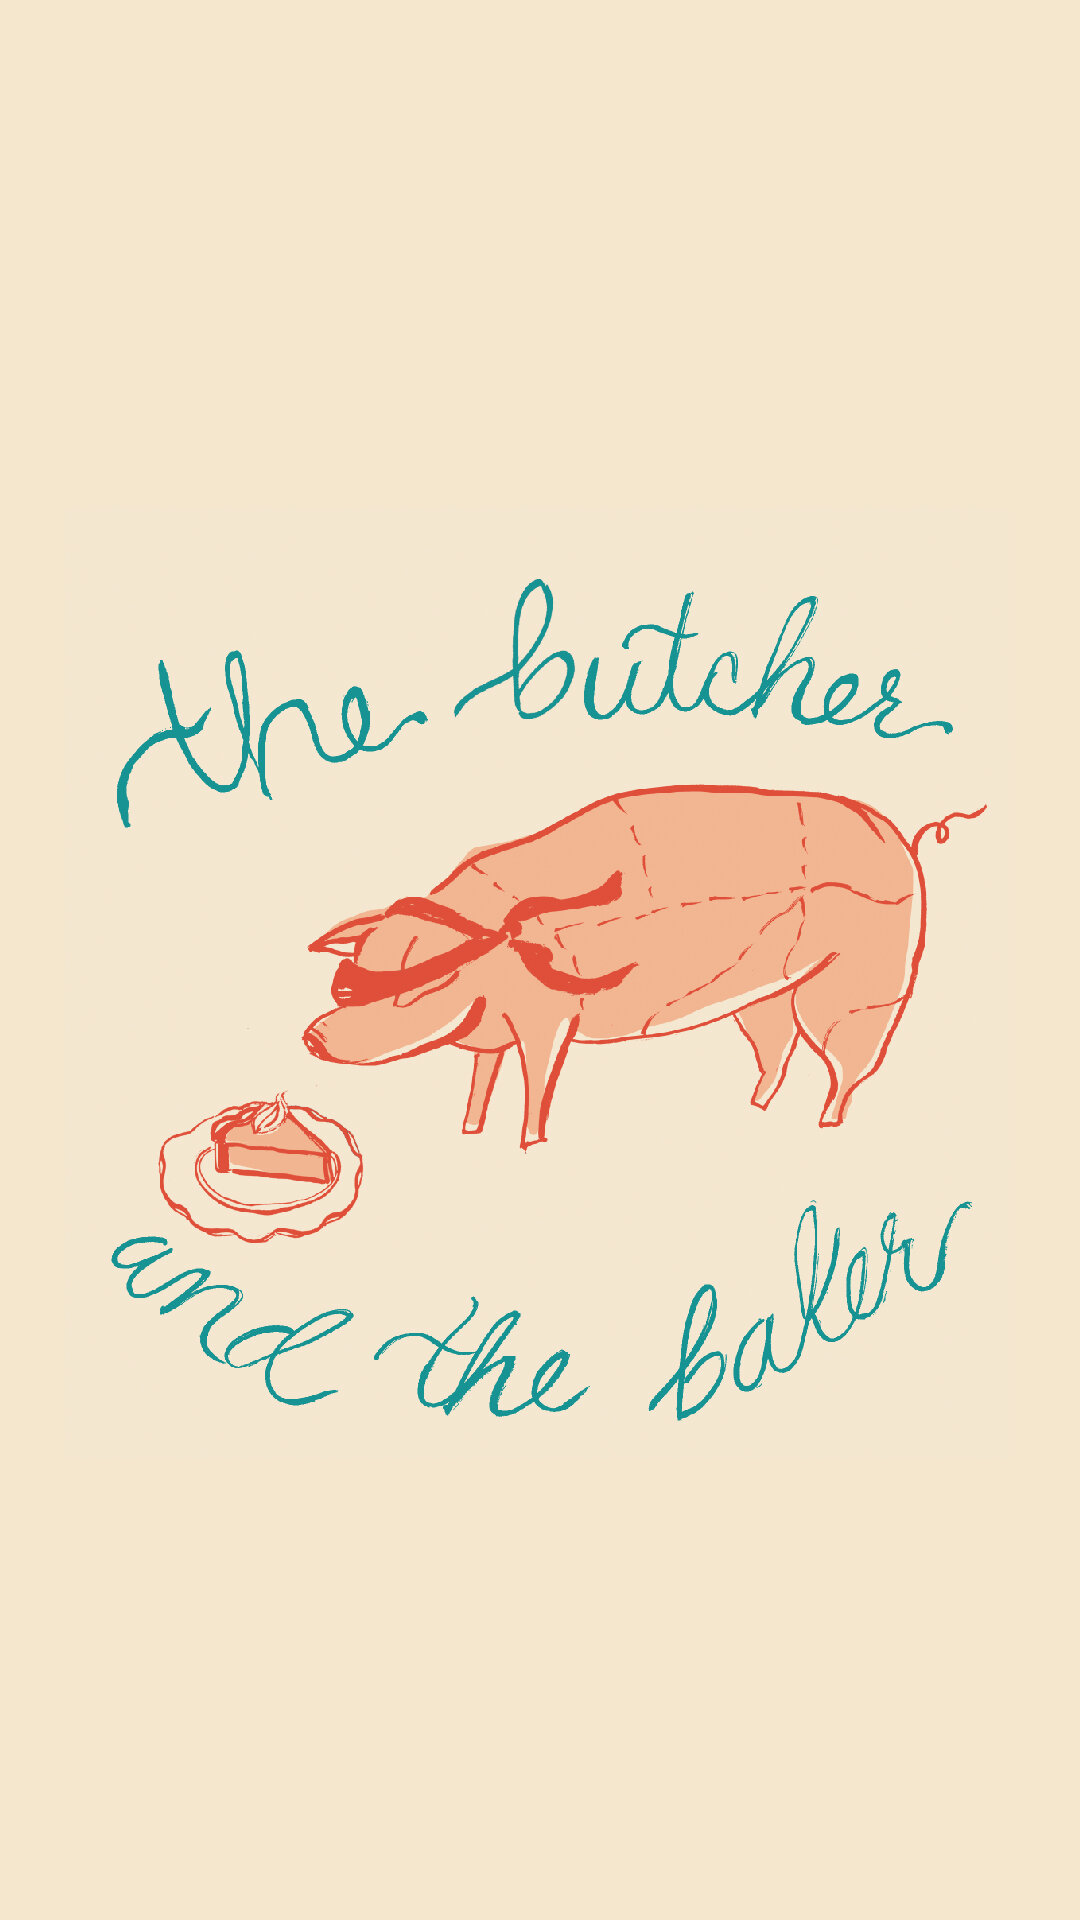 ButcherBaker-InstaS-Jan-01.jpg